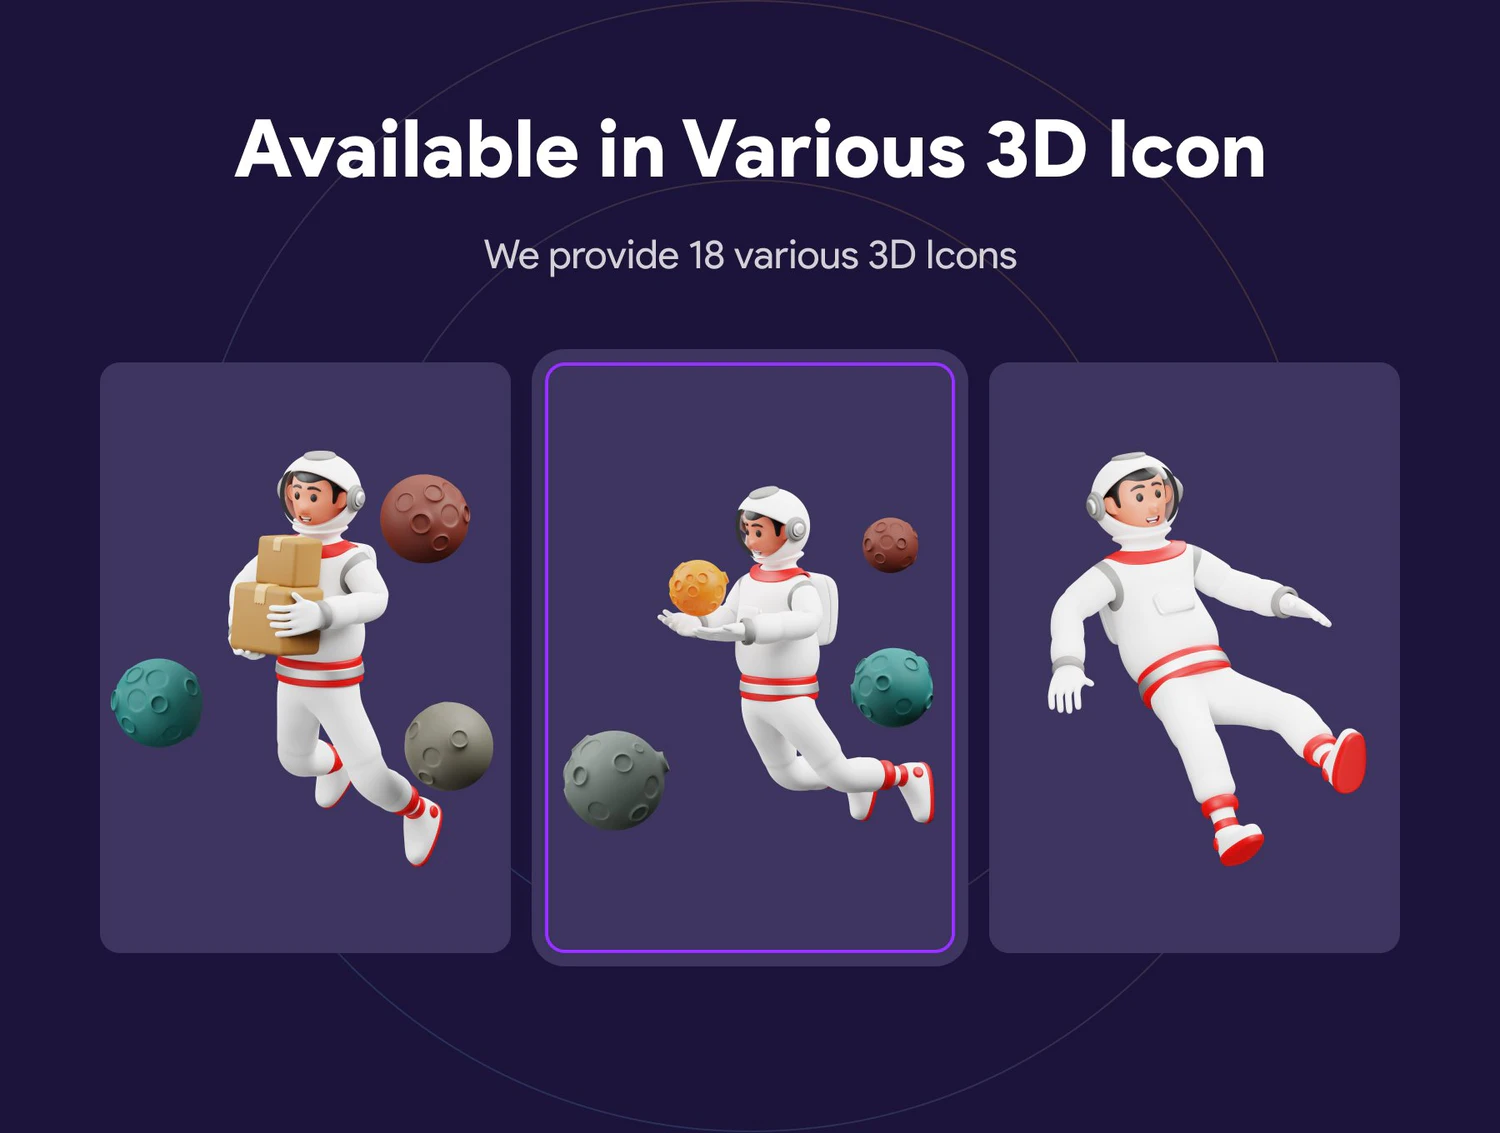 4612 18款高级独特太空宇航员3D插画插图图标Icons设计素材包 Astronaut 3D Character Illustration@GOOODME.COM